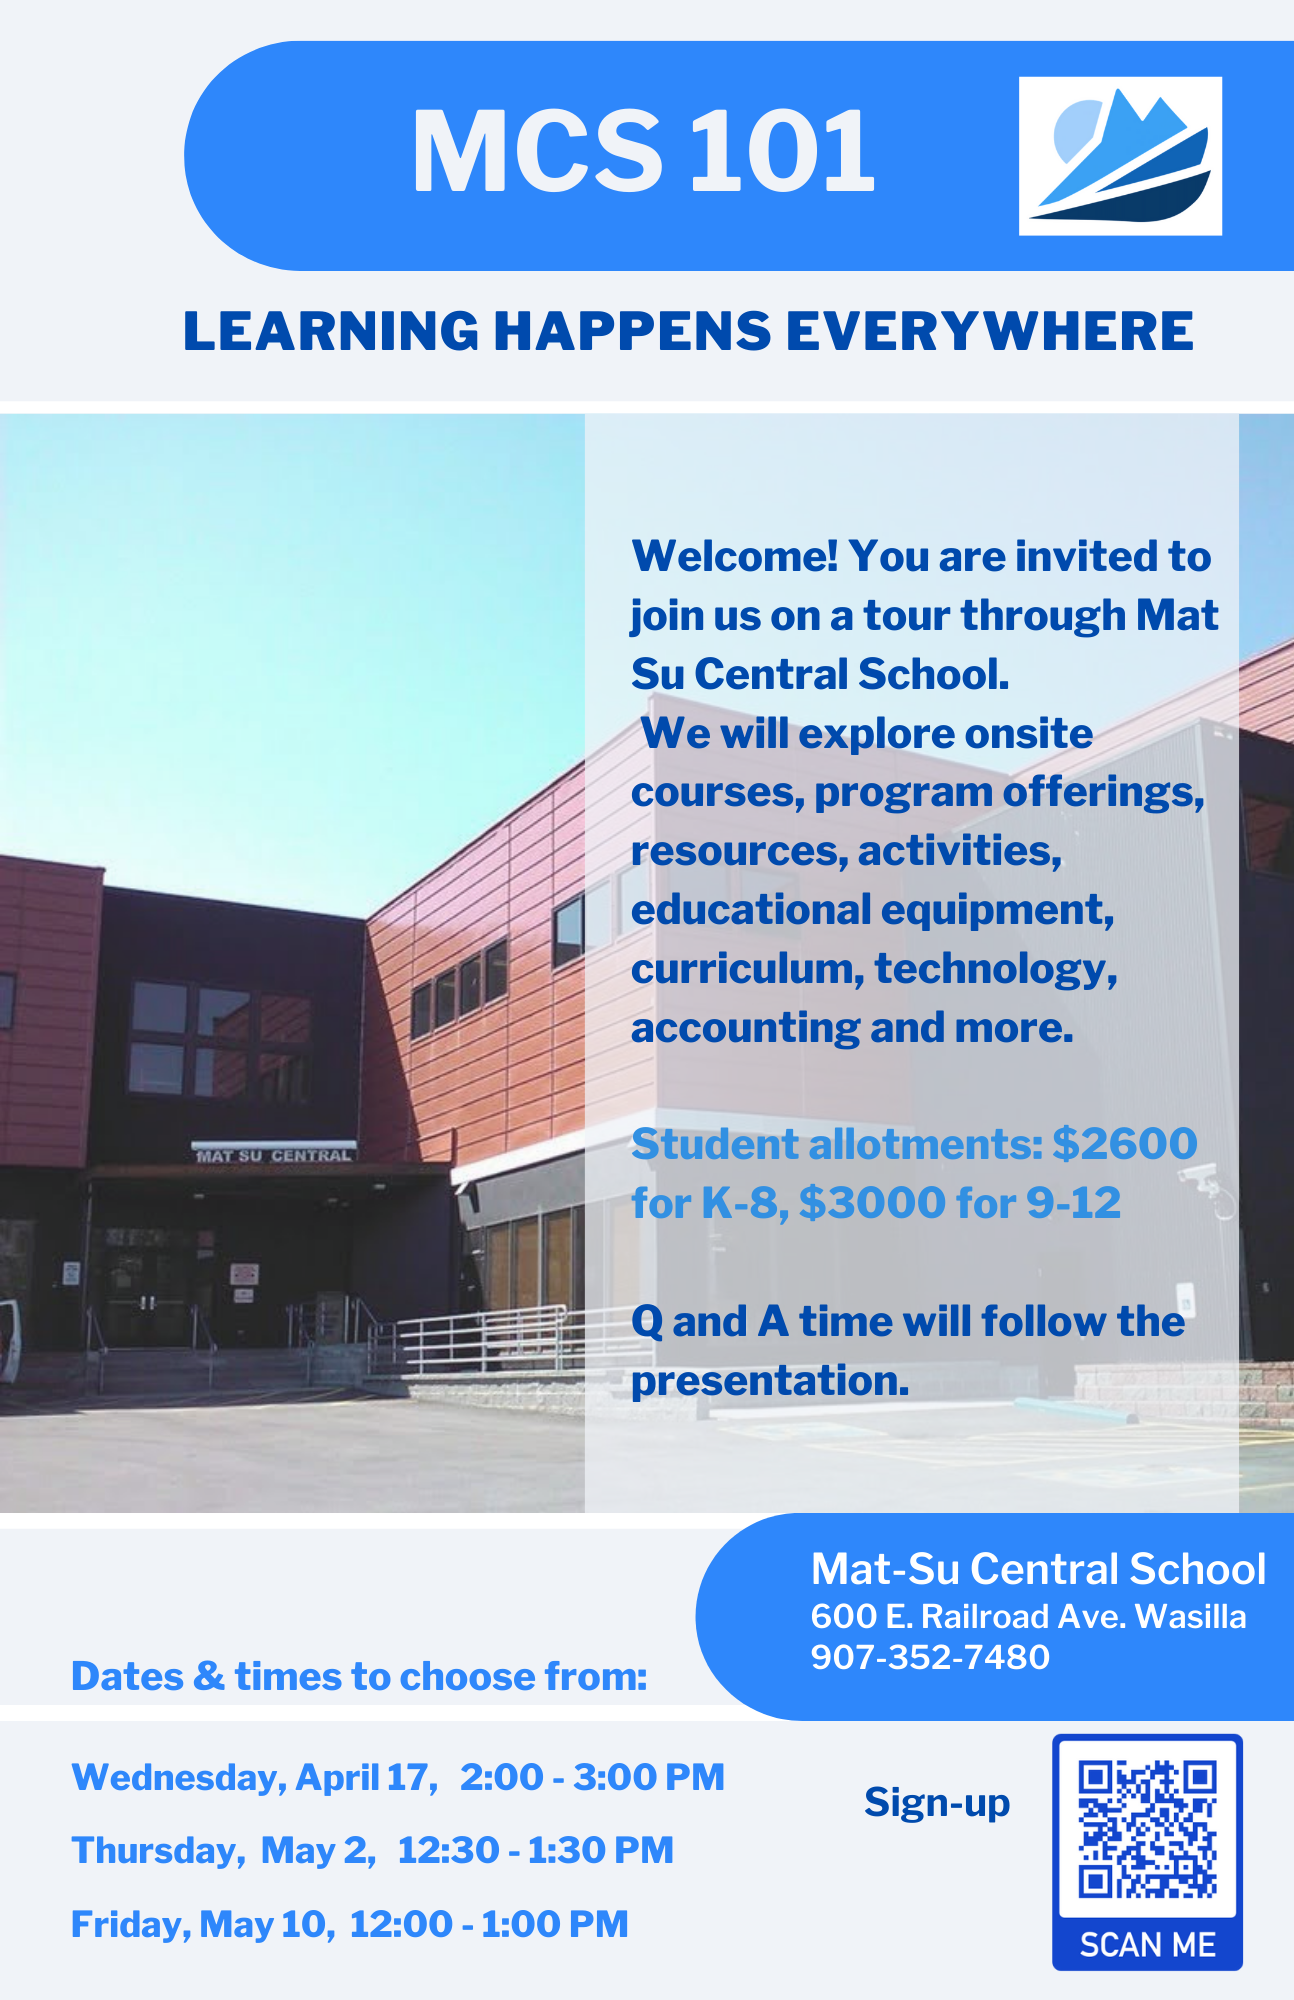 Mat-Su Central School Orientation Tour